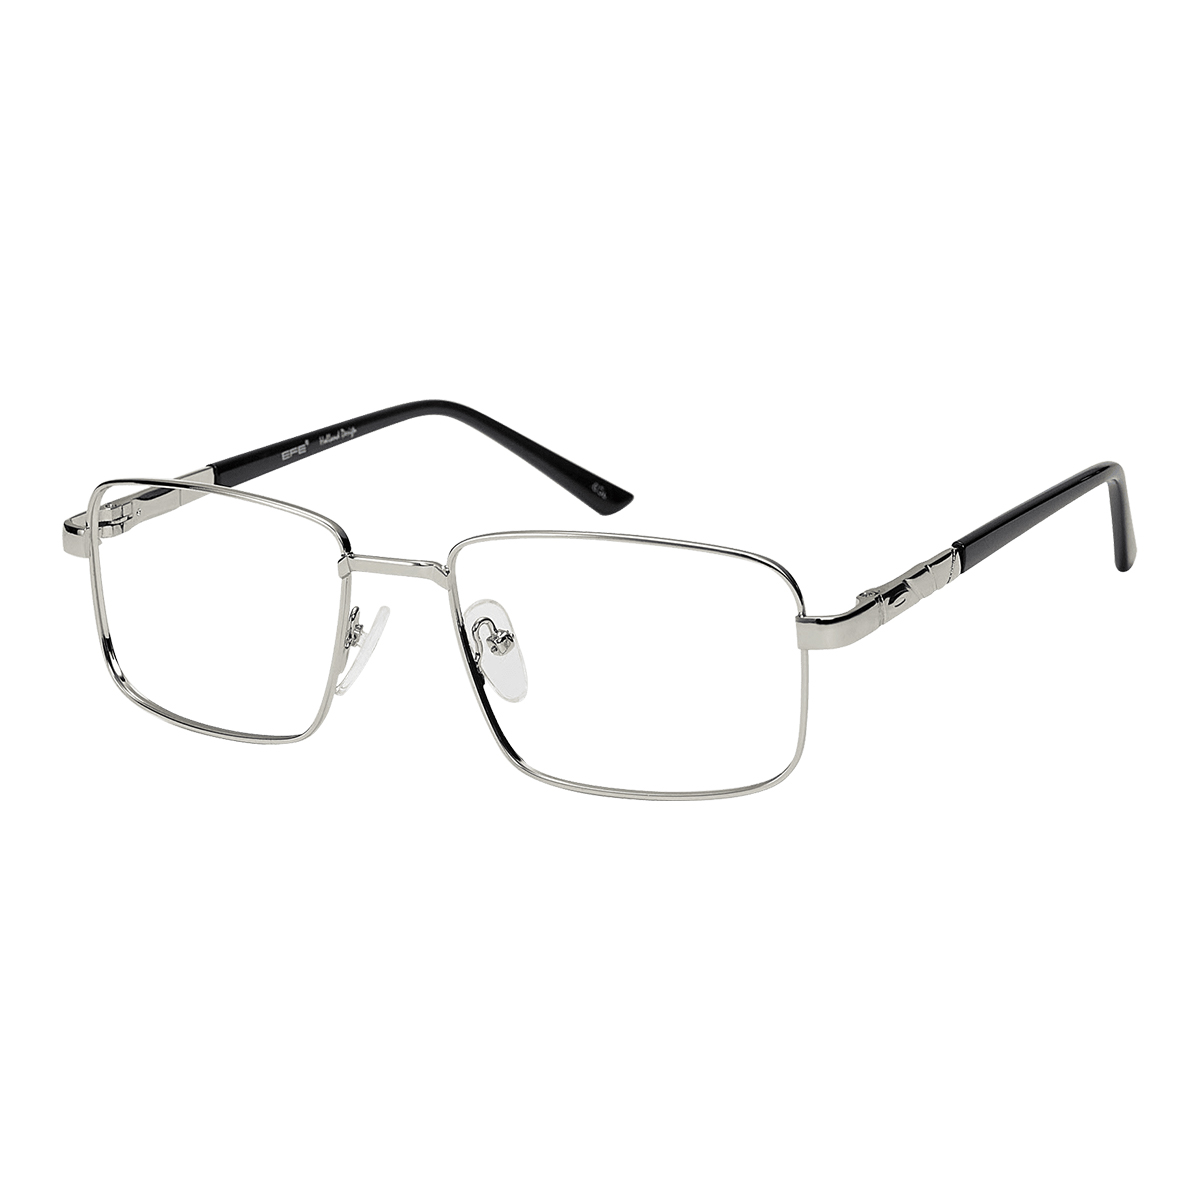 Hatch - Rectangle Silver Reading Glasses for Men